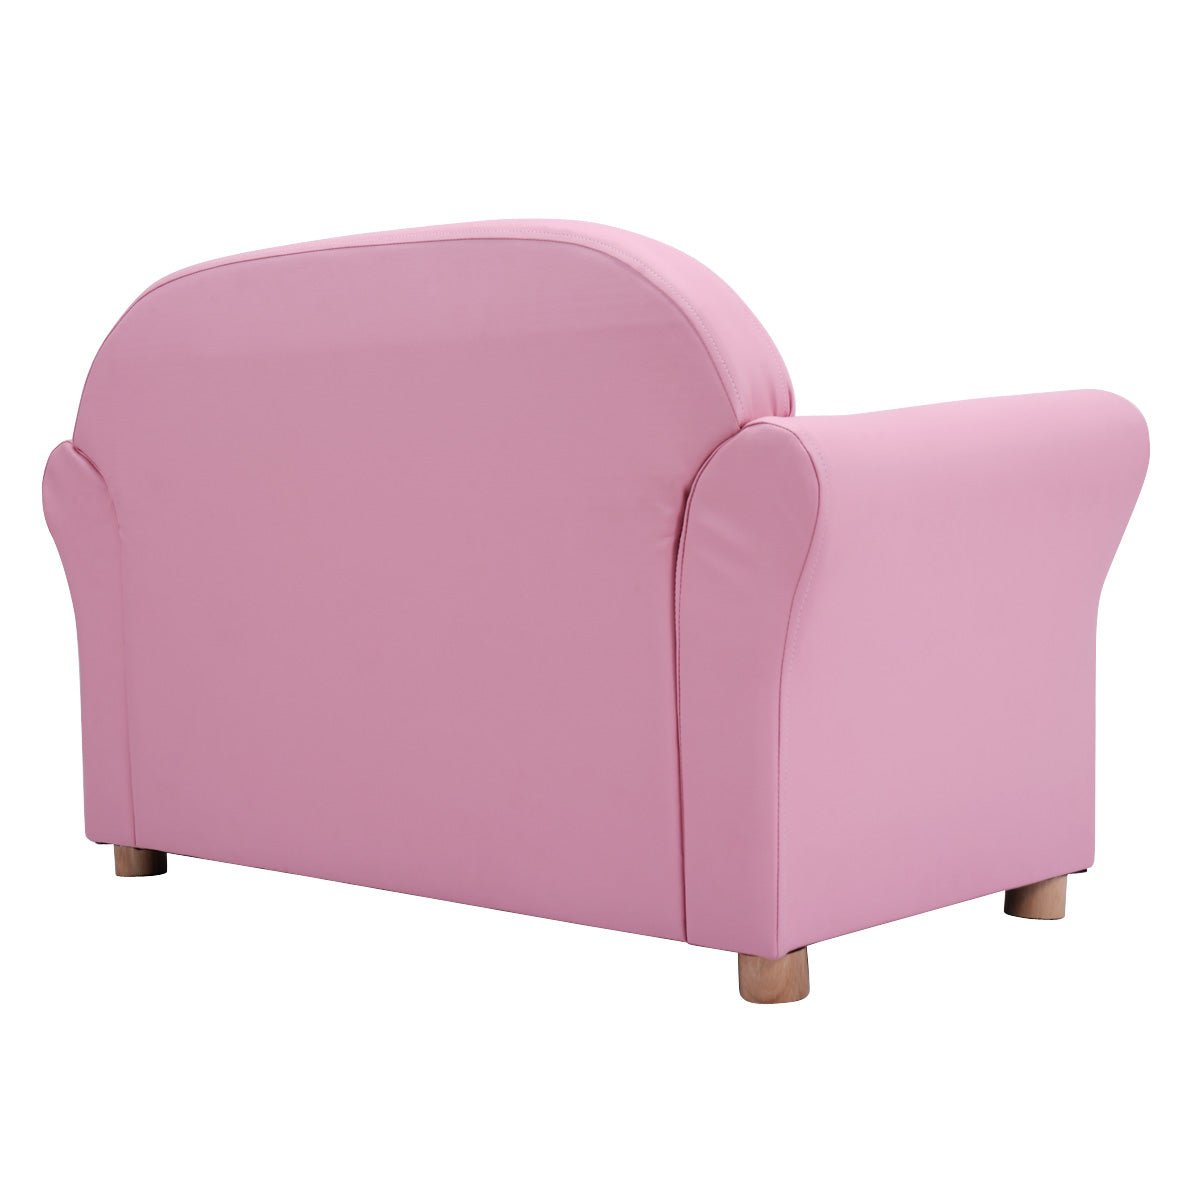 Kids Armrest Sofa Chair: PVC Leather, Cozy Spot for Children